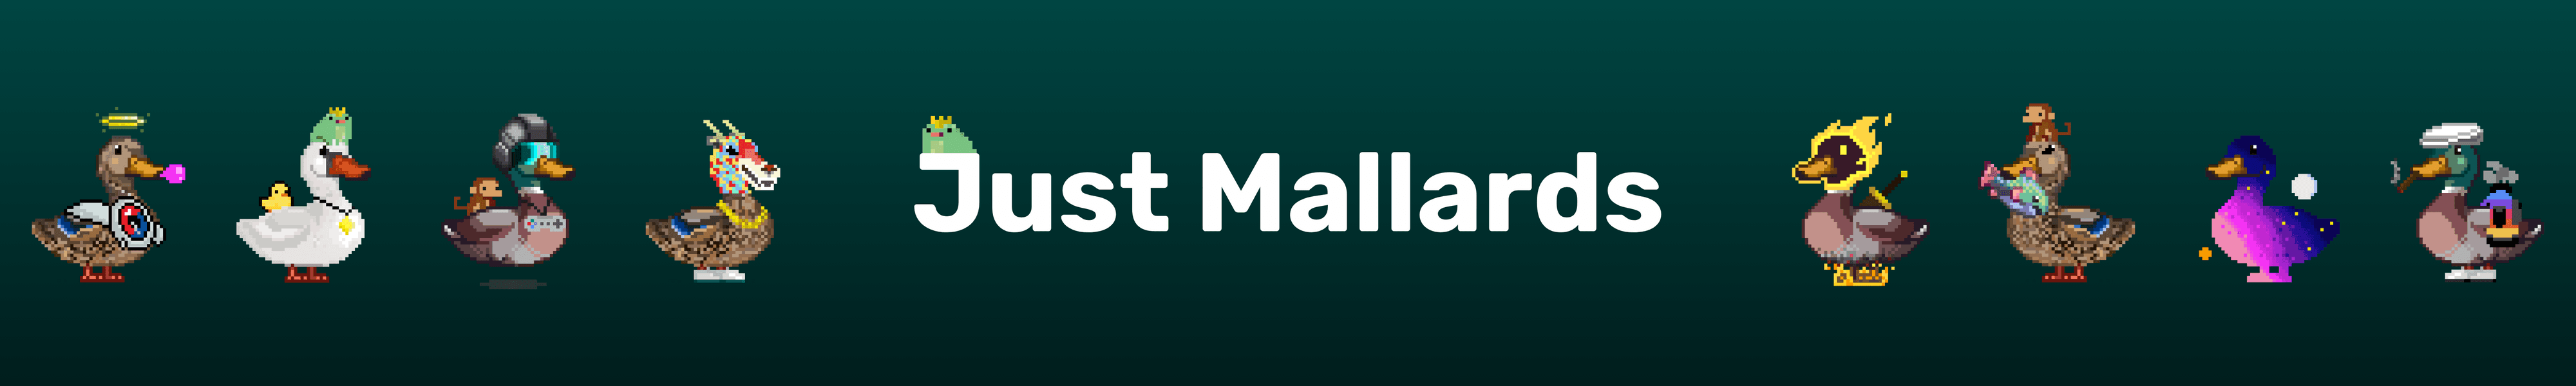 Mallard_Deployer banner